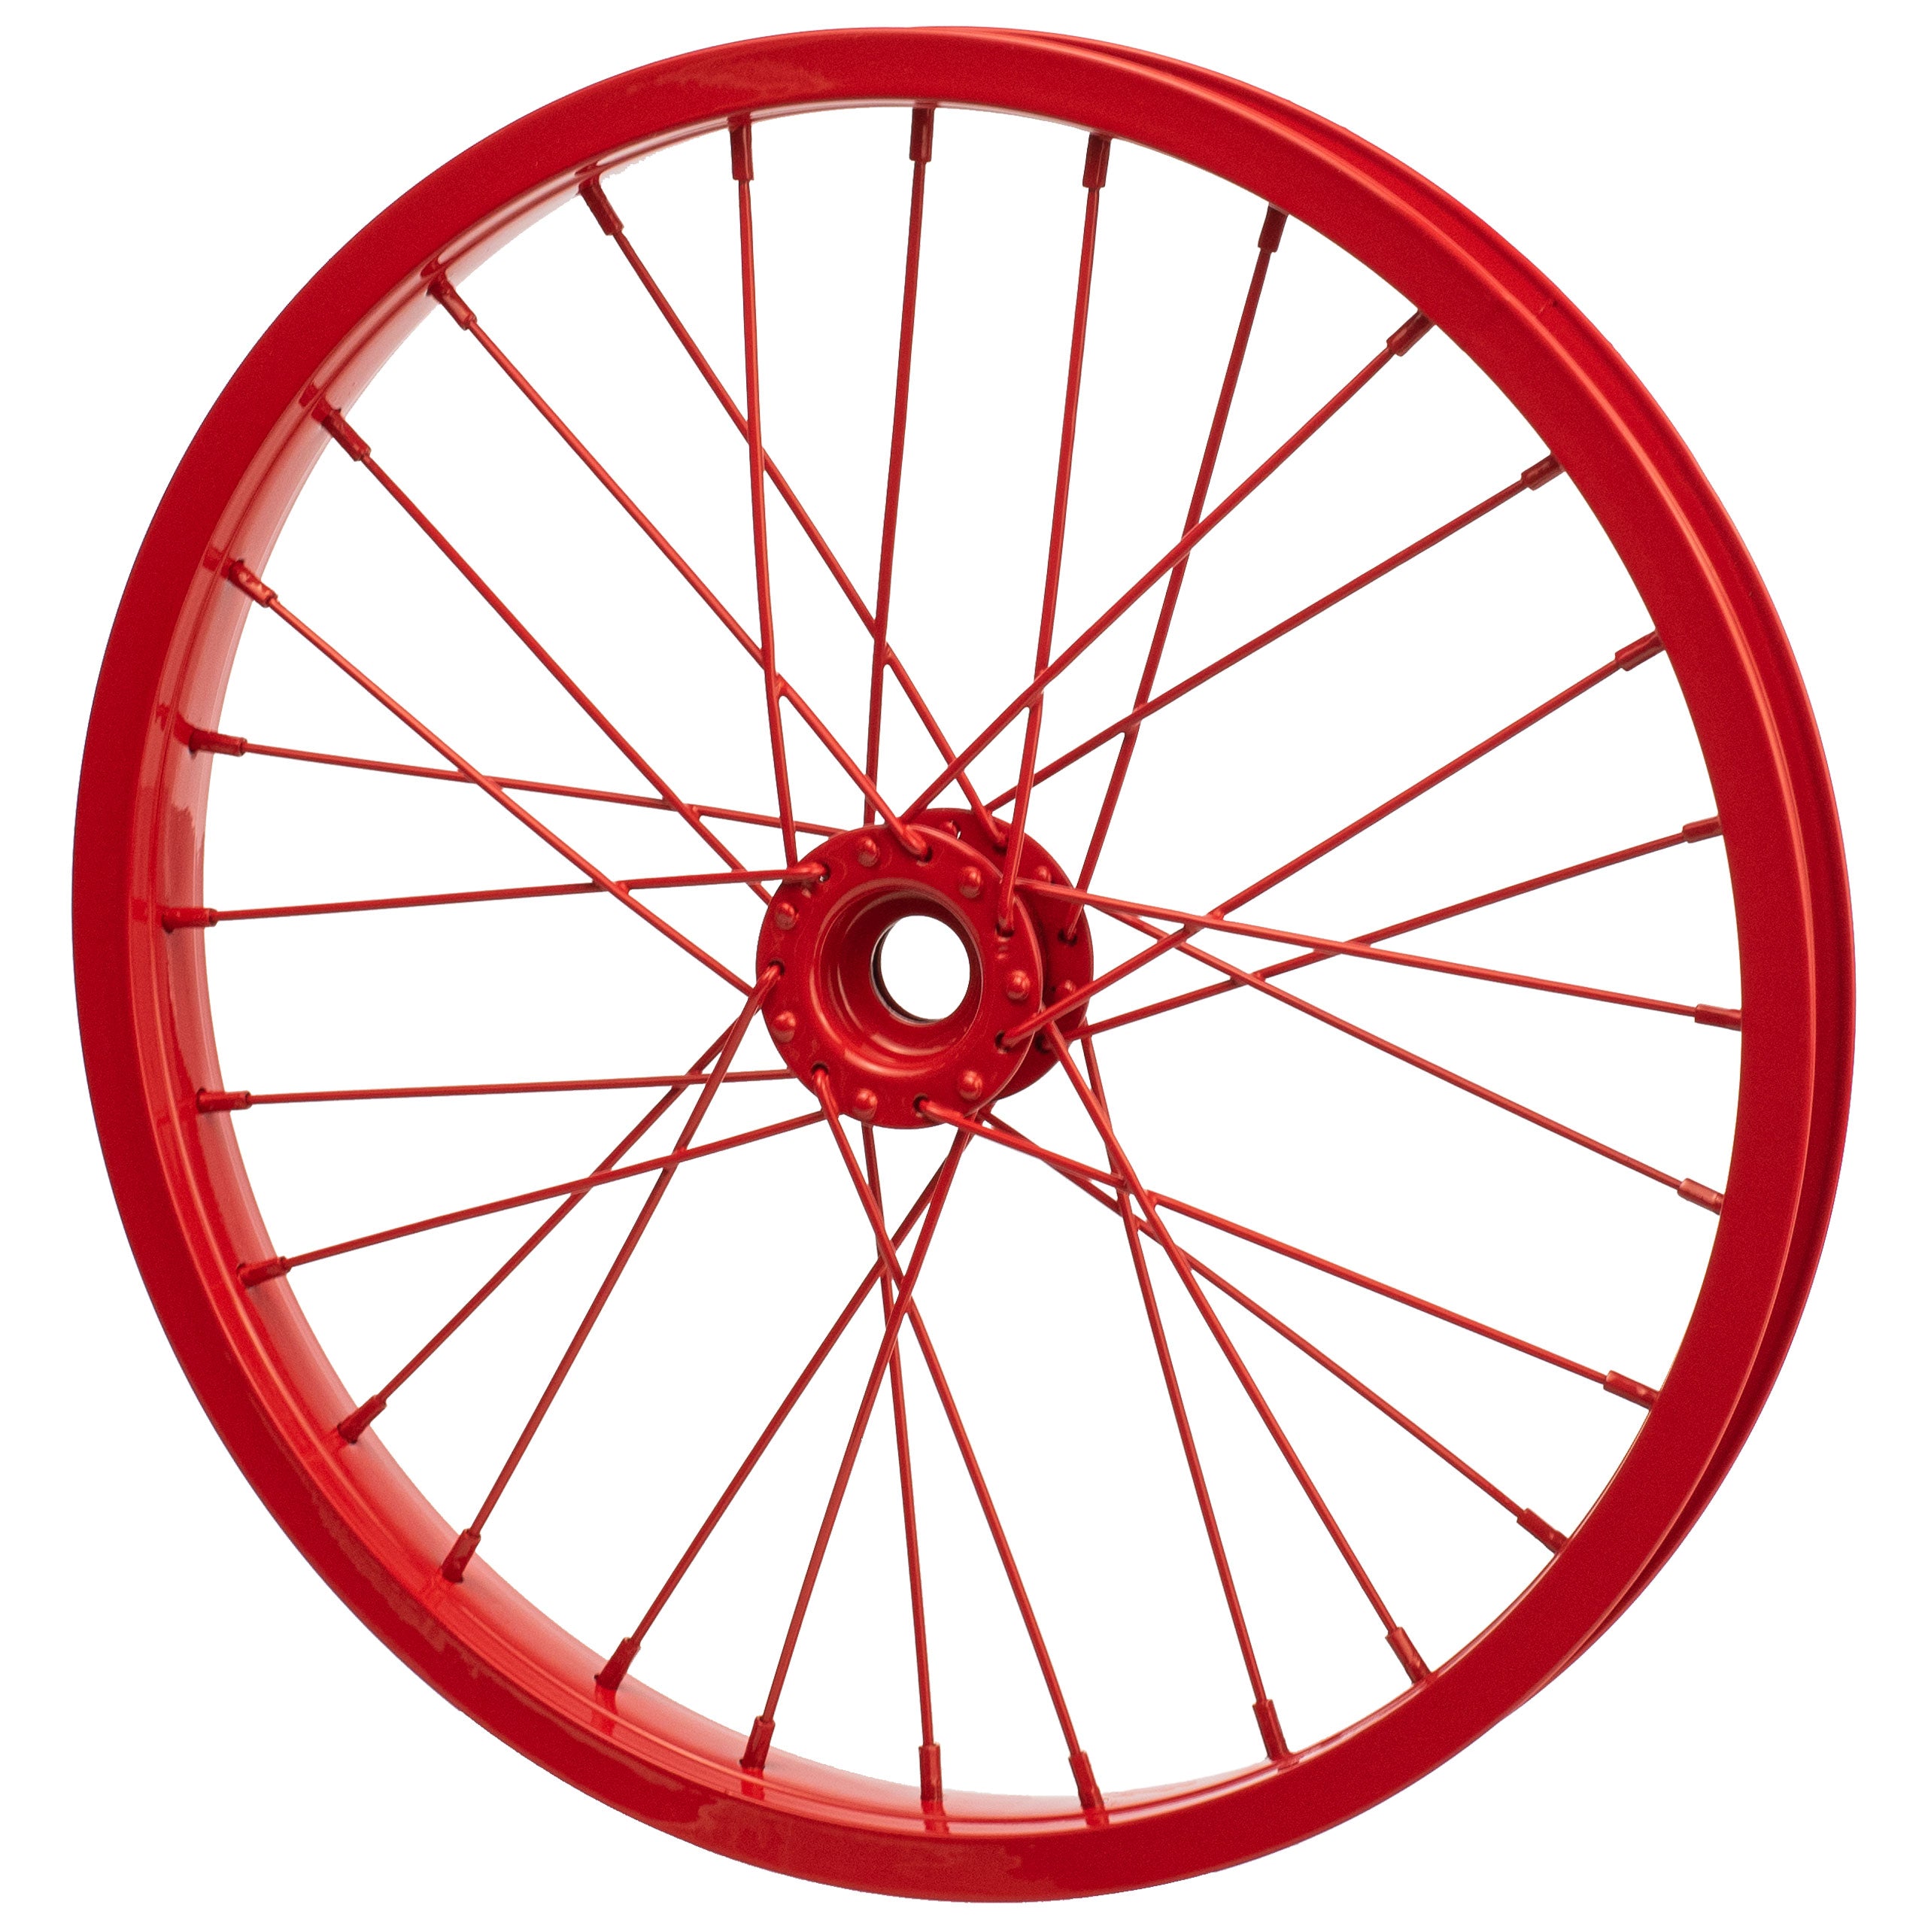 20" Decorative Bicycle Rim: Red